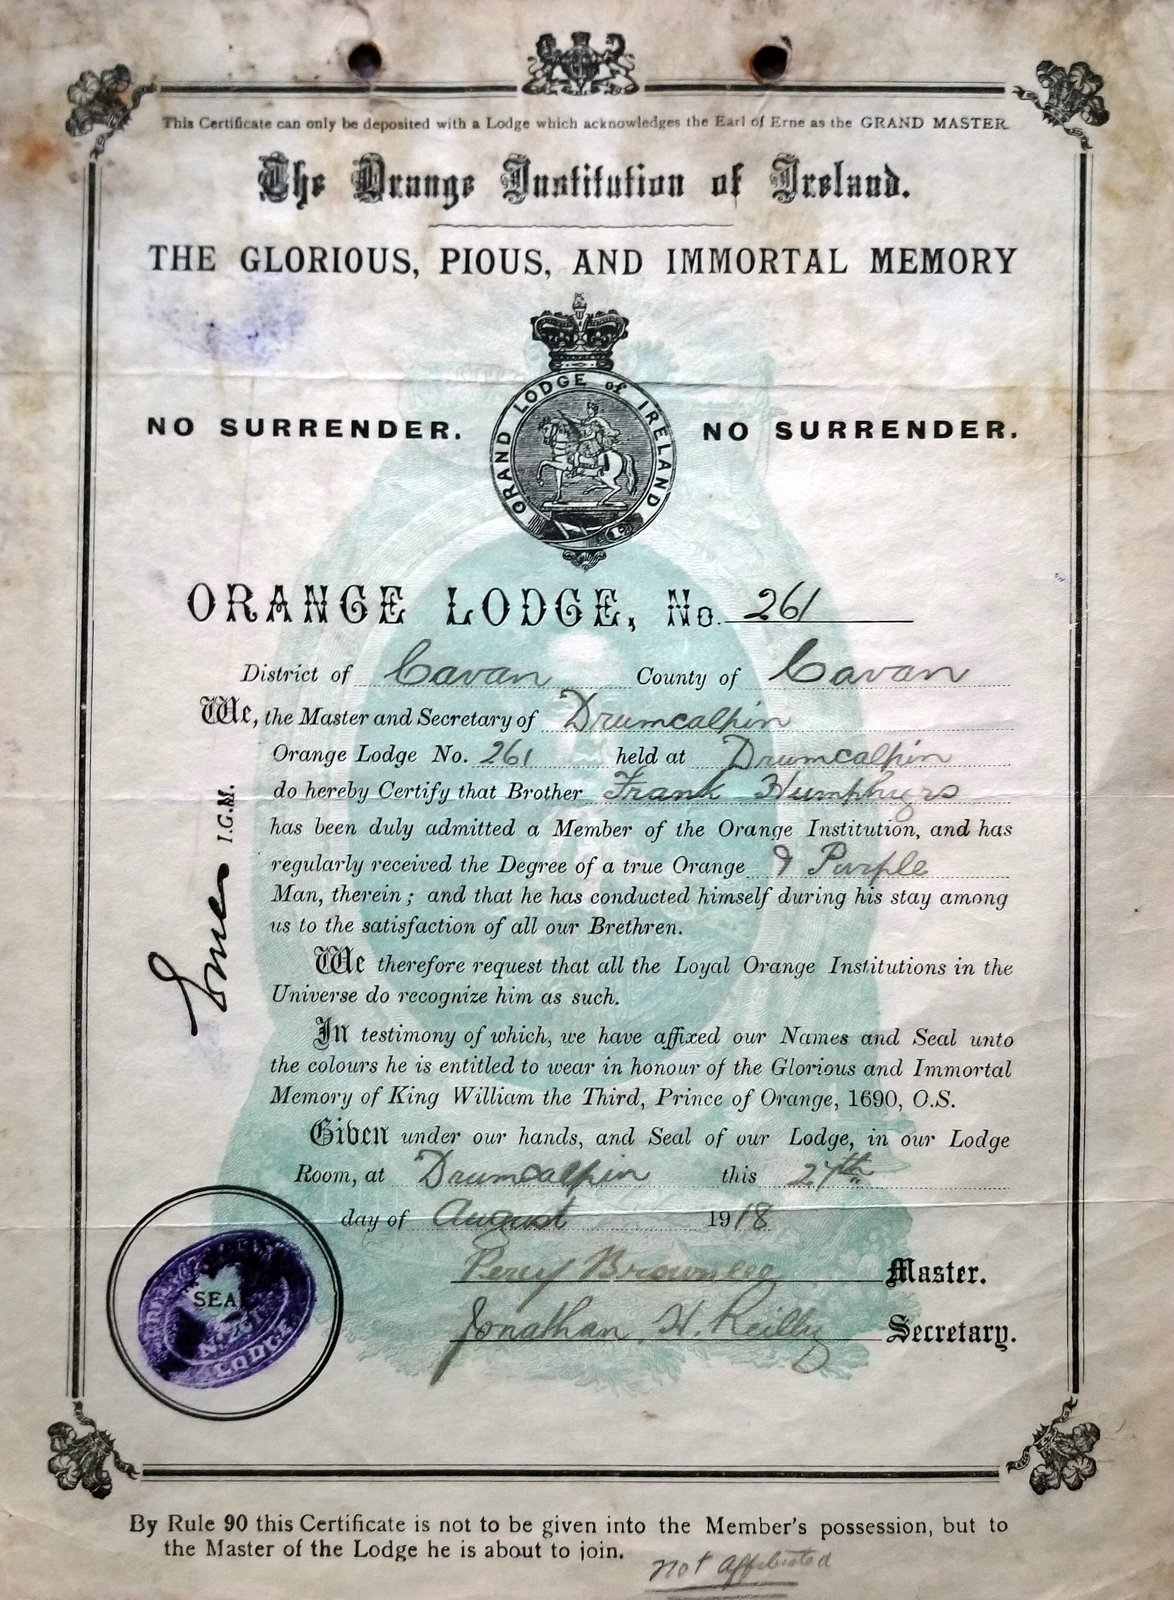 Original Orange Lodge Transfer Certificate from a Lodge in County Cavan, Ireland dated 24 August 1918